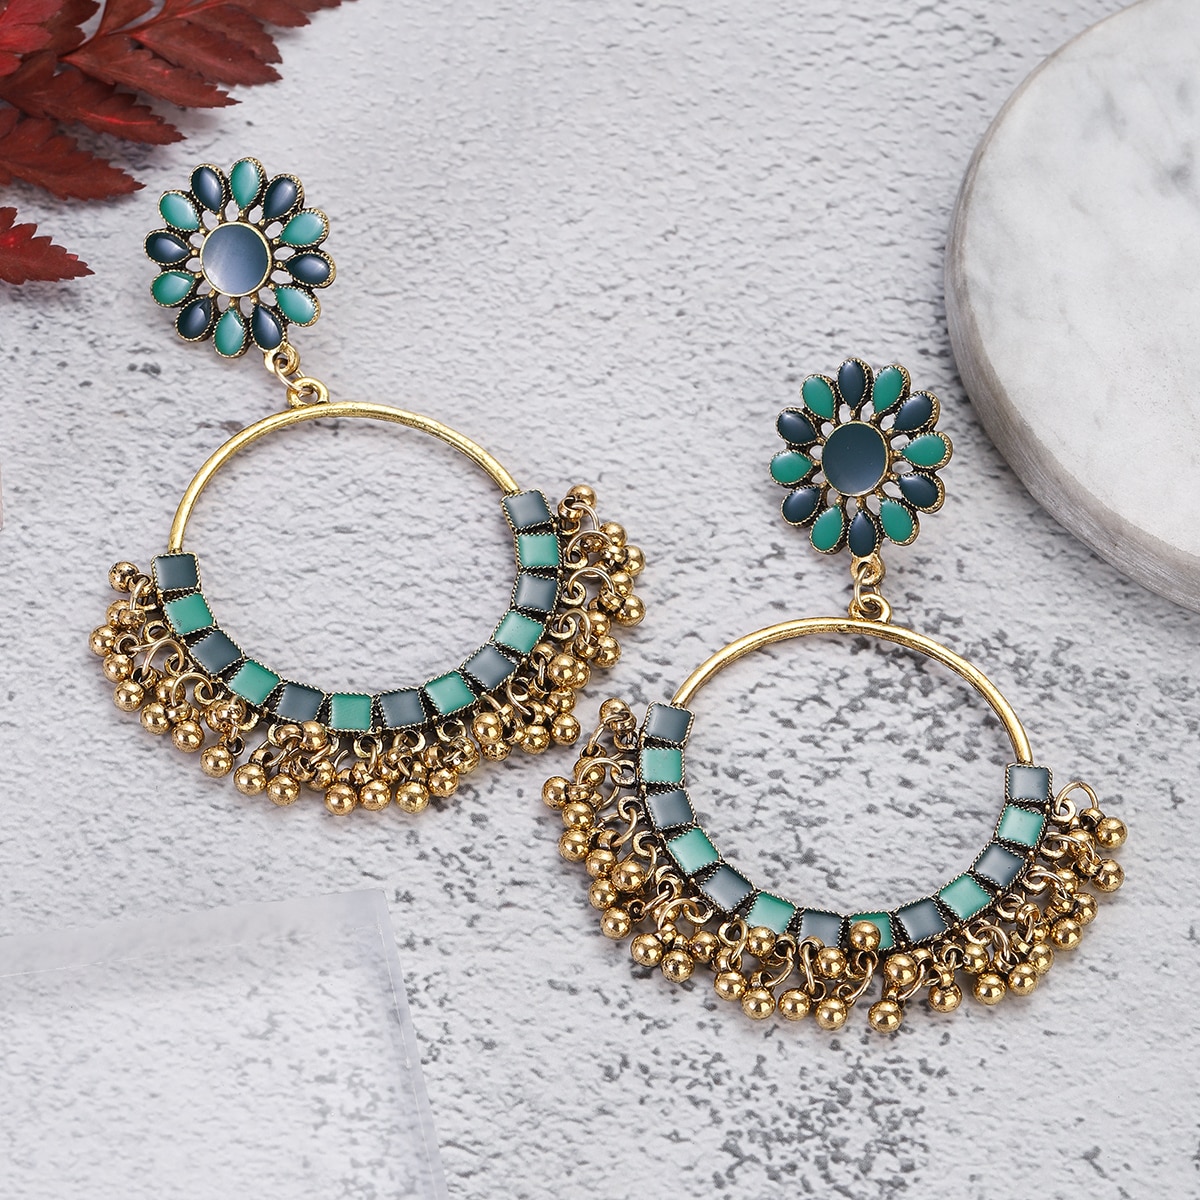 Ethnic-Vintage-Big-Round-Dangle-Earrings-for-Women-Boho-Green-Flower-Beads-Tassel-Earrings-Party-Jew-1005005057264367-9